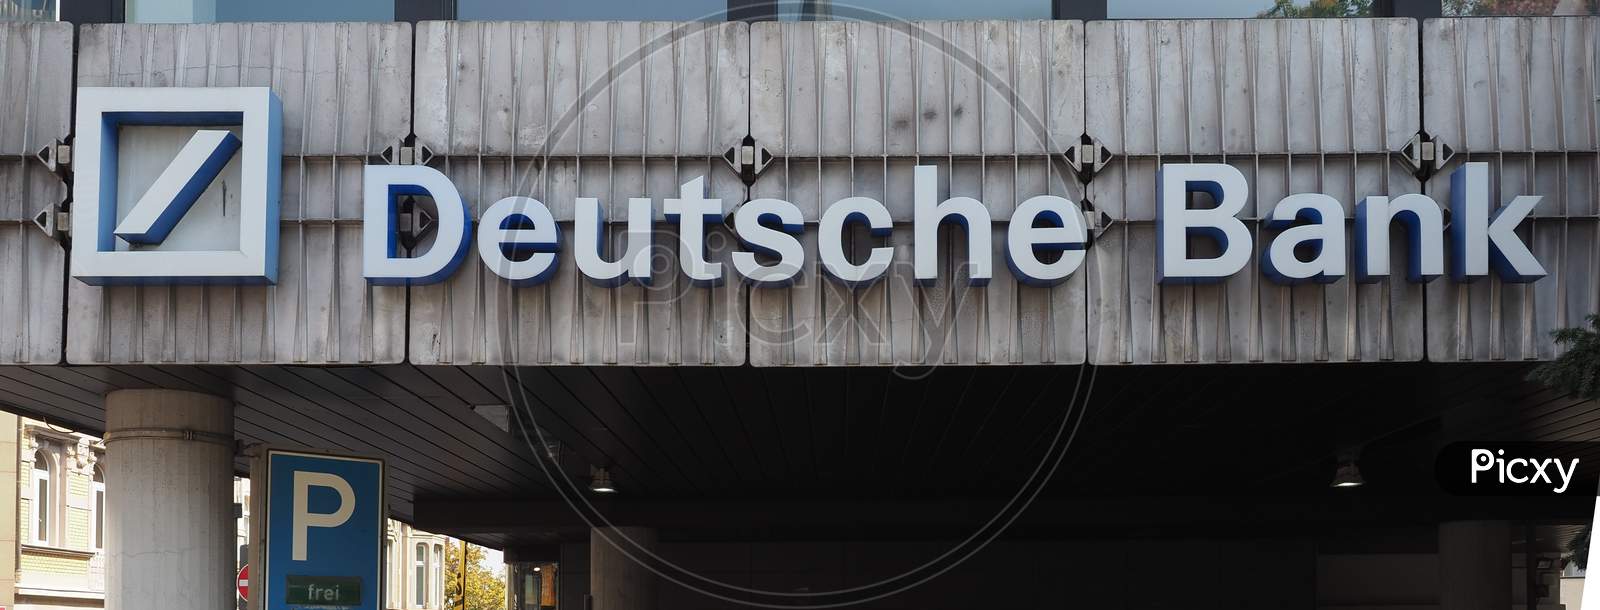 Aachen, Germany - Circa August 2019: Deutsche Bank Sign